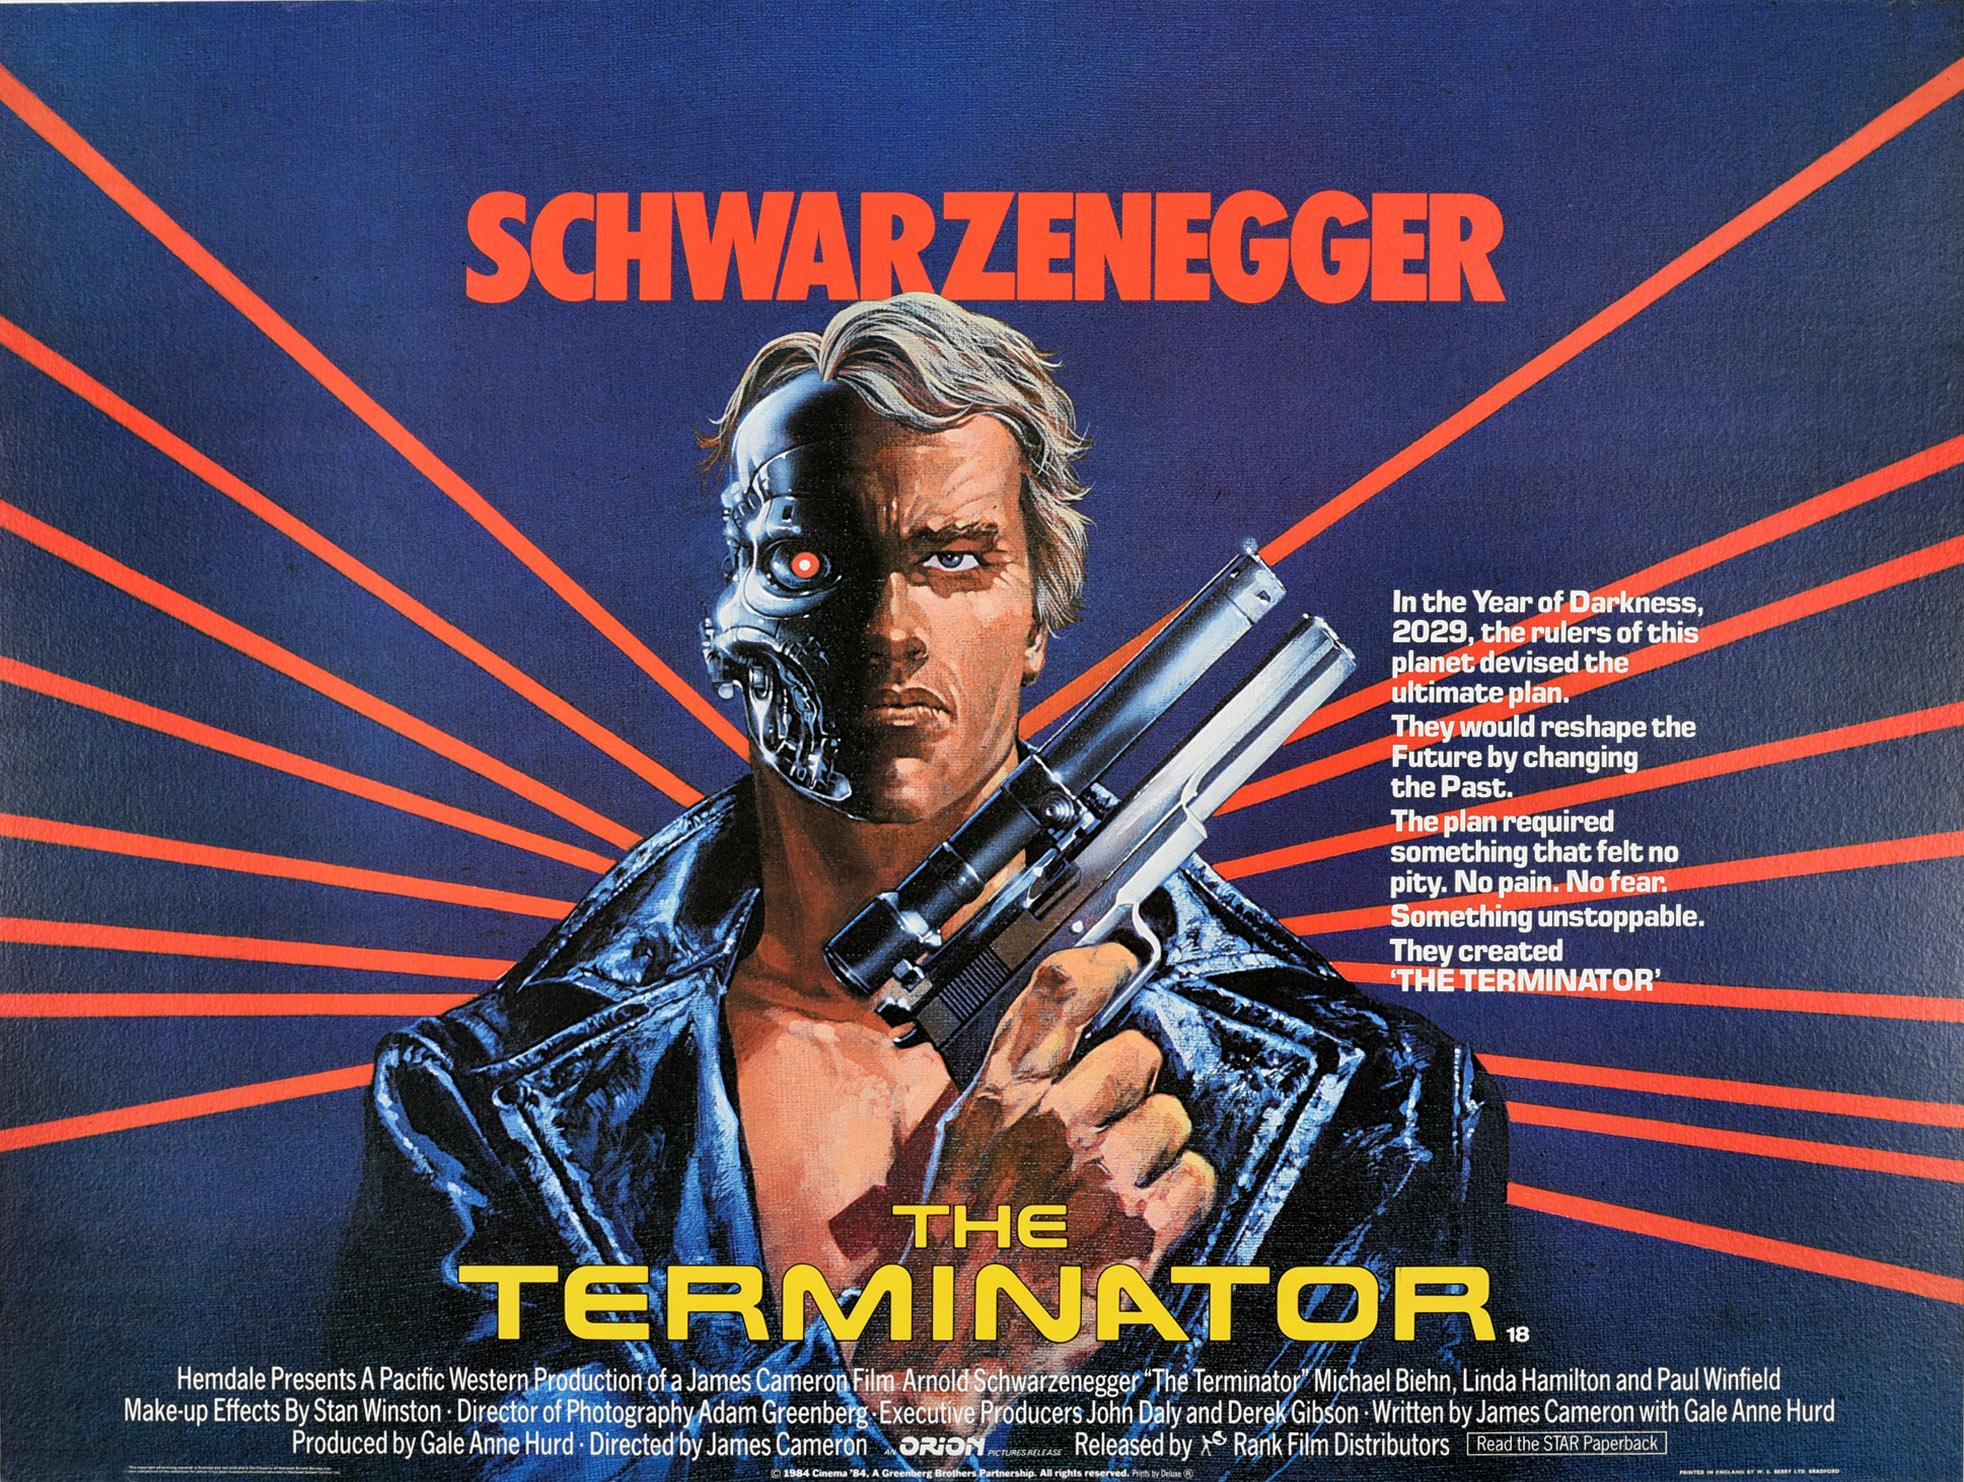 Mike Francis Print - Original Vintage Movie Poster Arnold Schwarzenegger The Terminator Sci-Fi Film